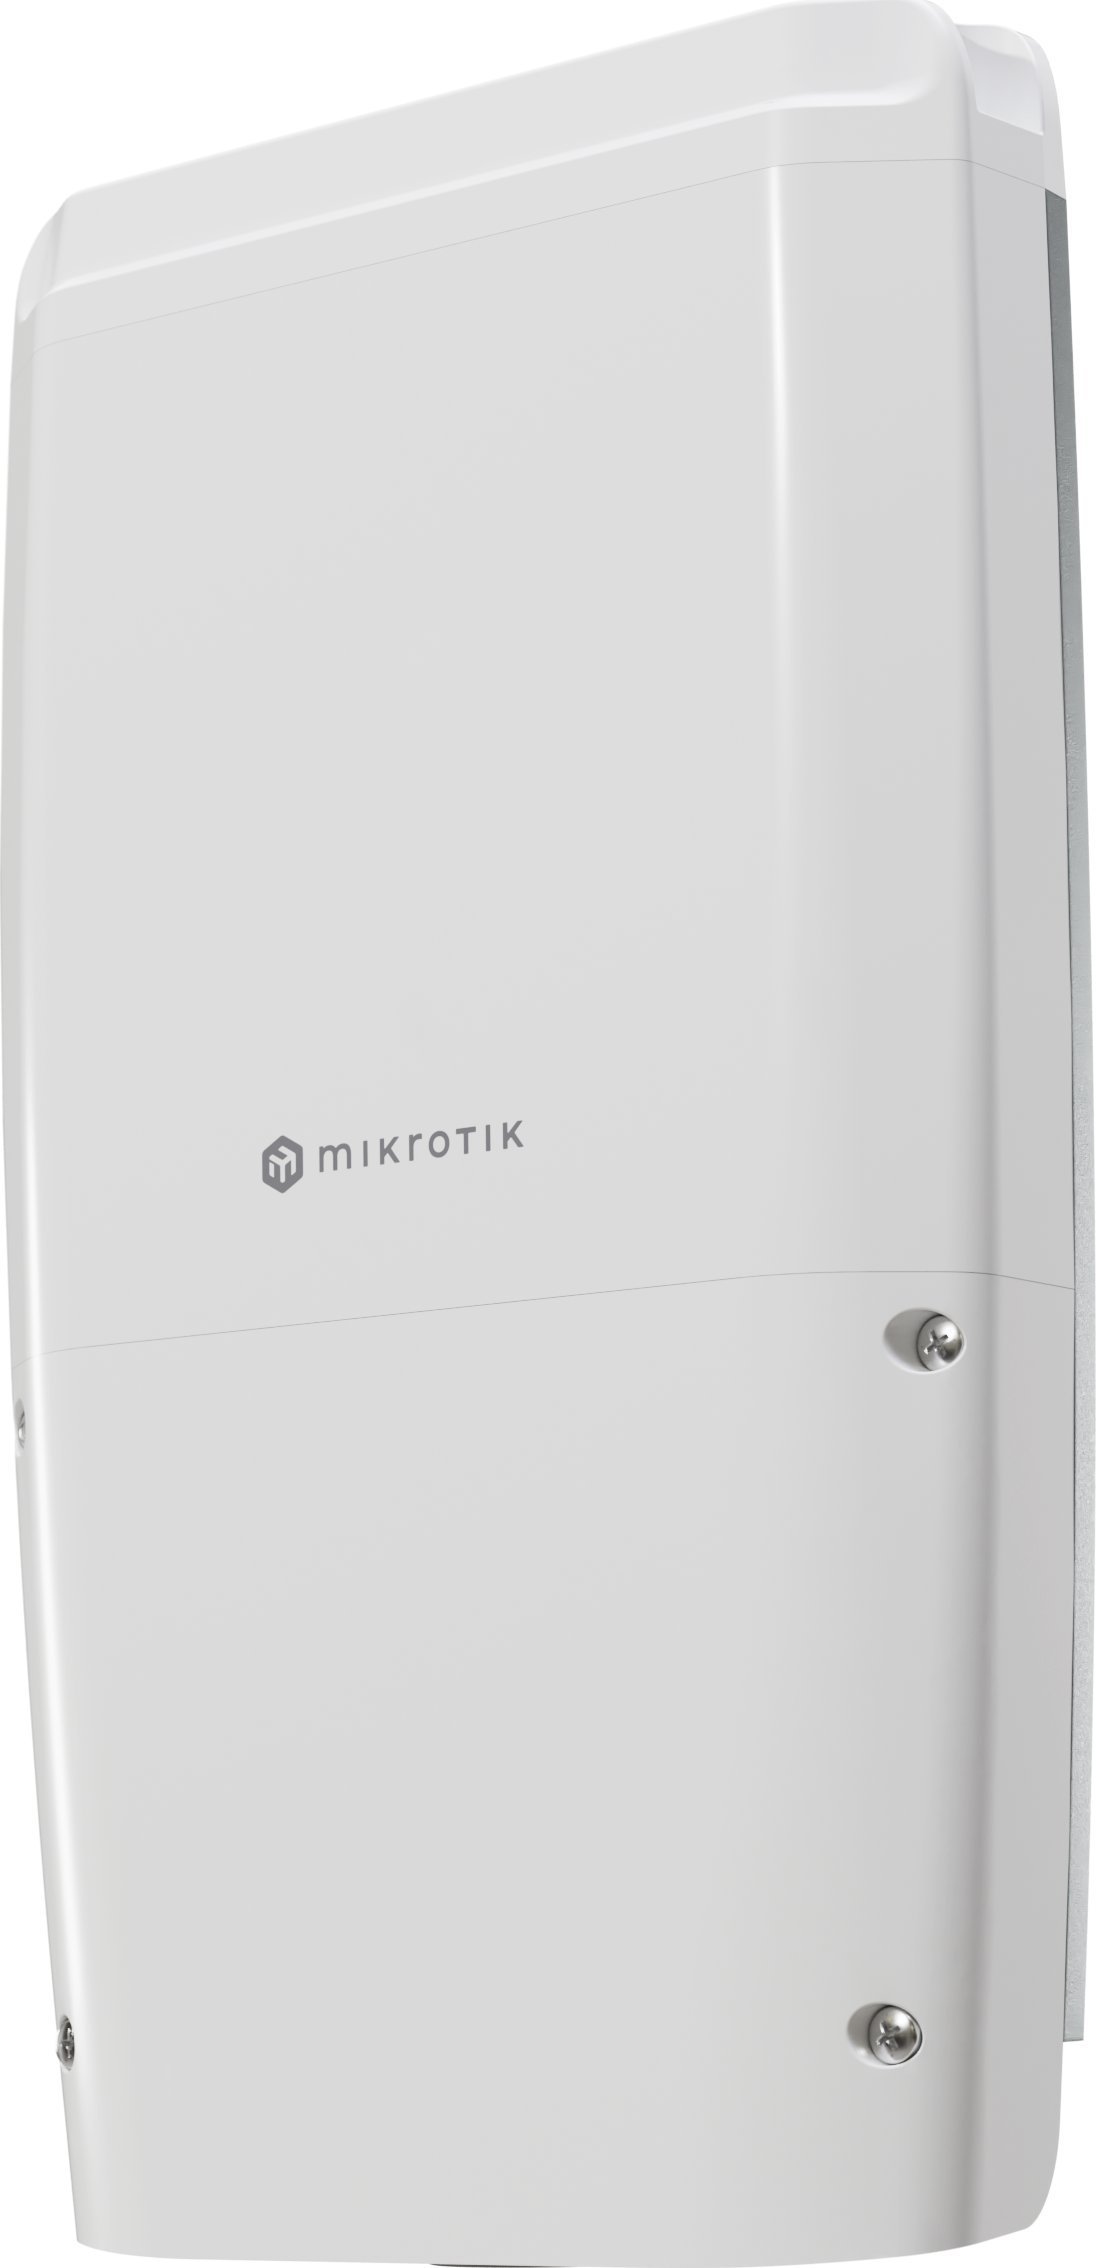 Comutator MikroTik NET ROUTER/SWITCH 4PORT 1000M/CRS504-4XQ-OUT MIKROTIK